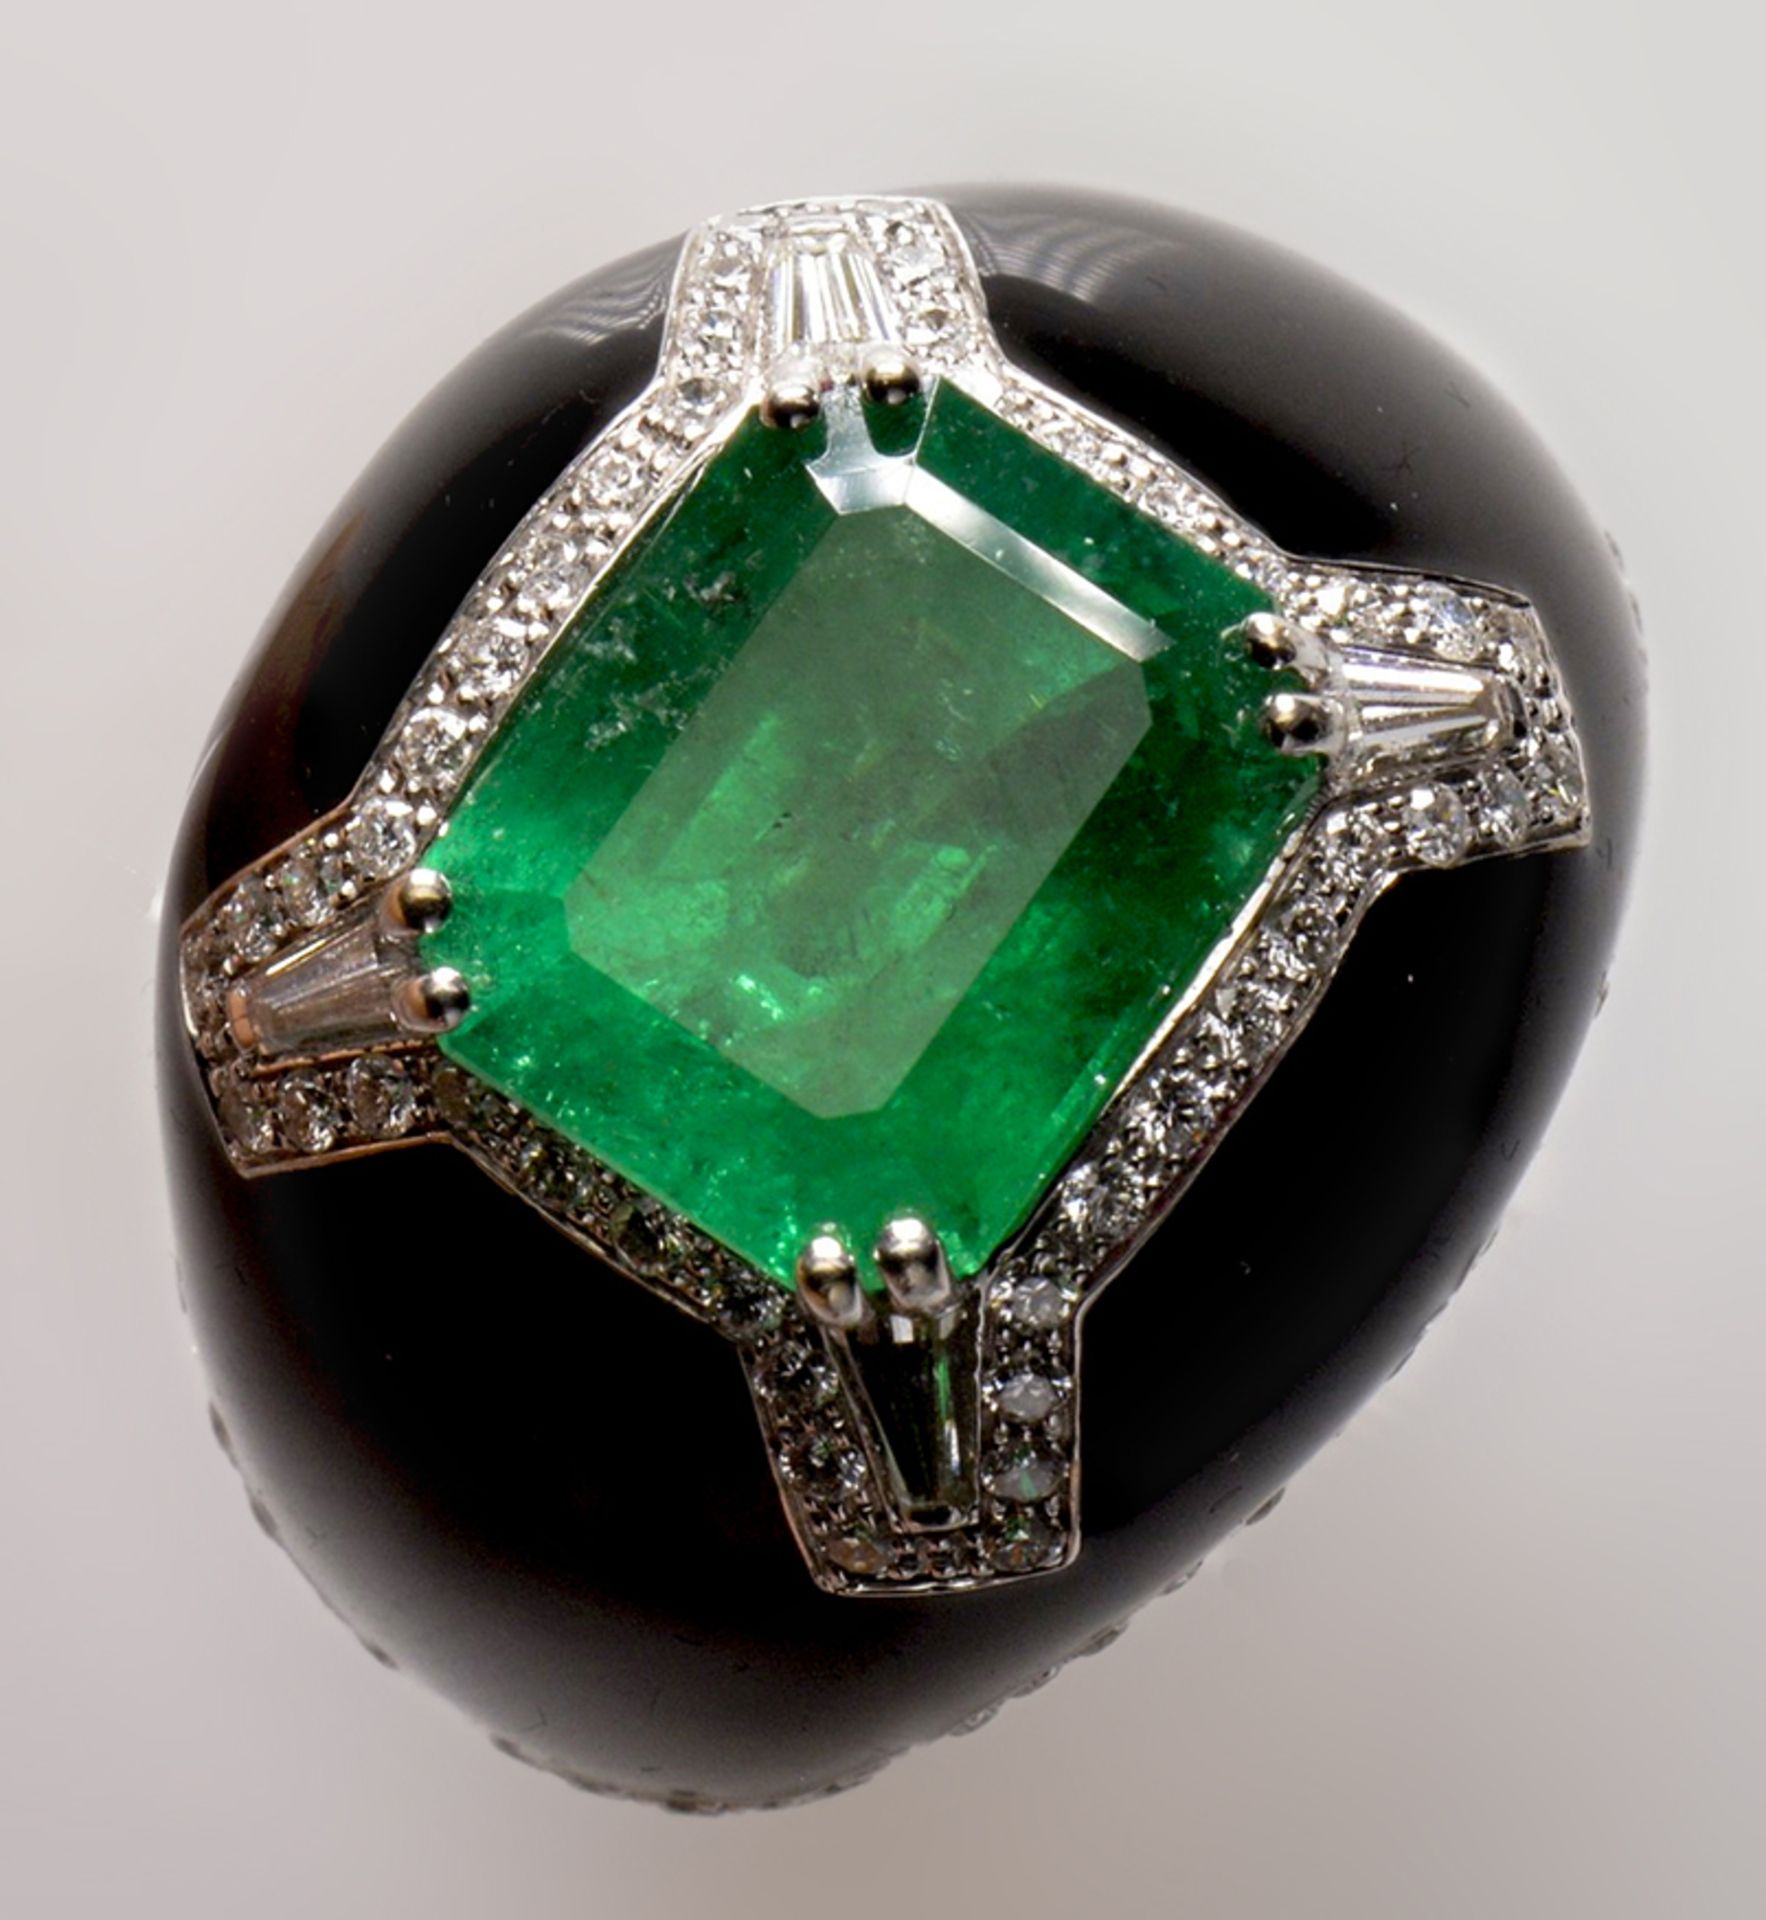 Emerald ring - SSEF certificate, emerald circa 5 cts. Black enamel set with diamonds -